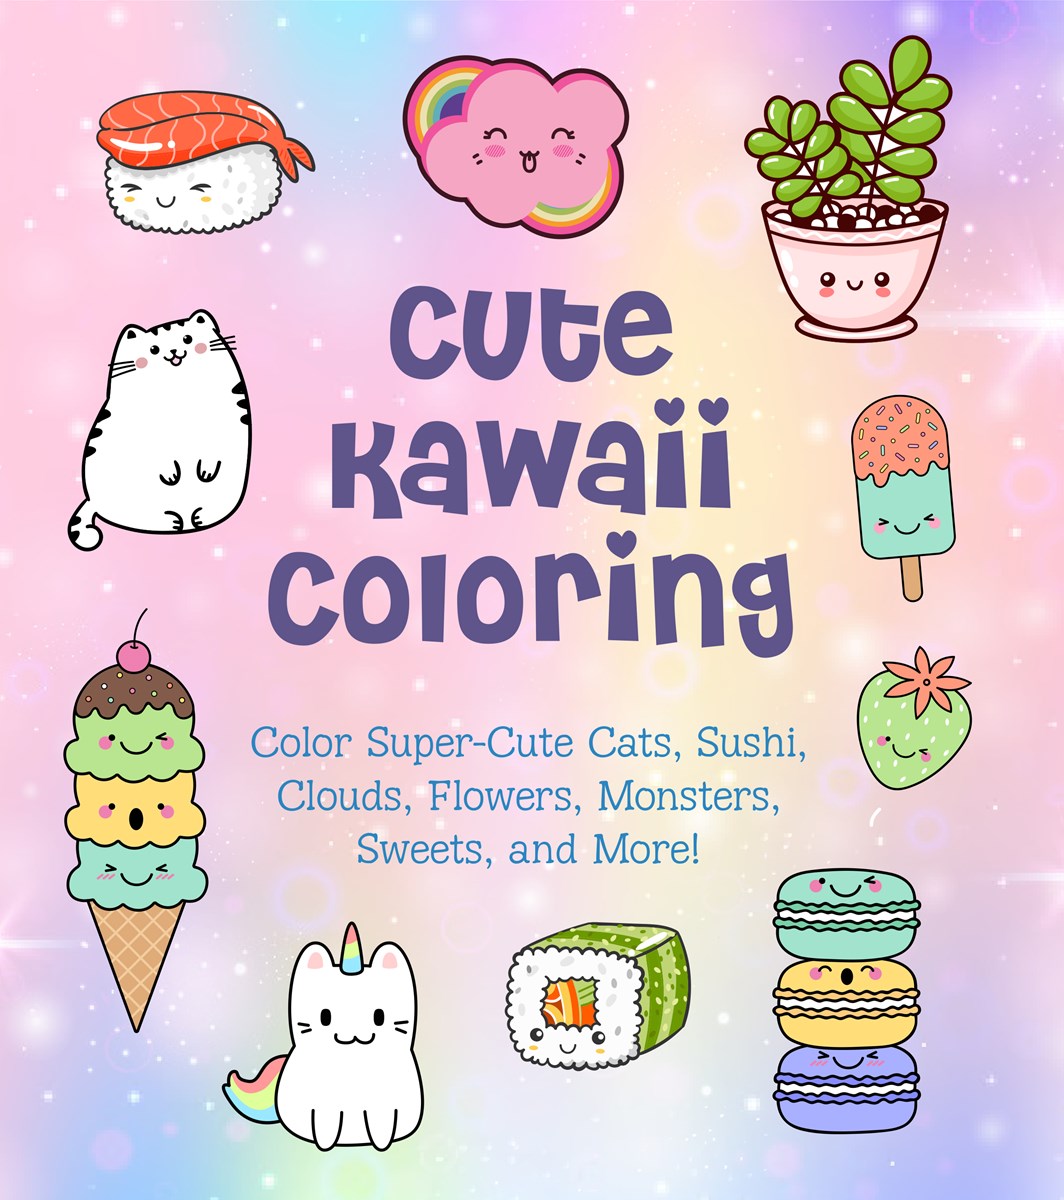 Cute Unicorns Easy Colouring Book for Kids - Captain Colouring Book